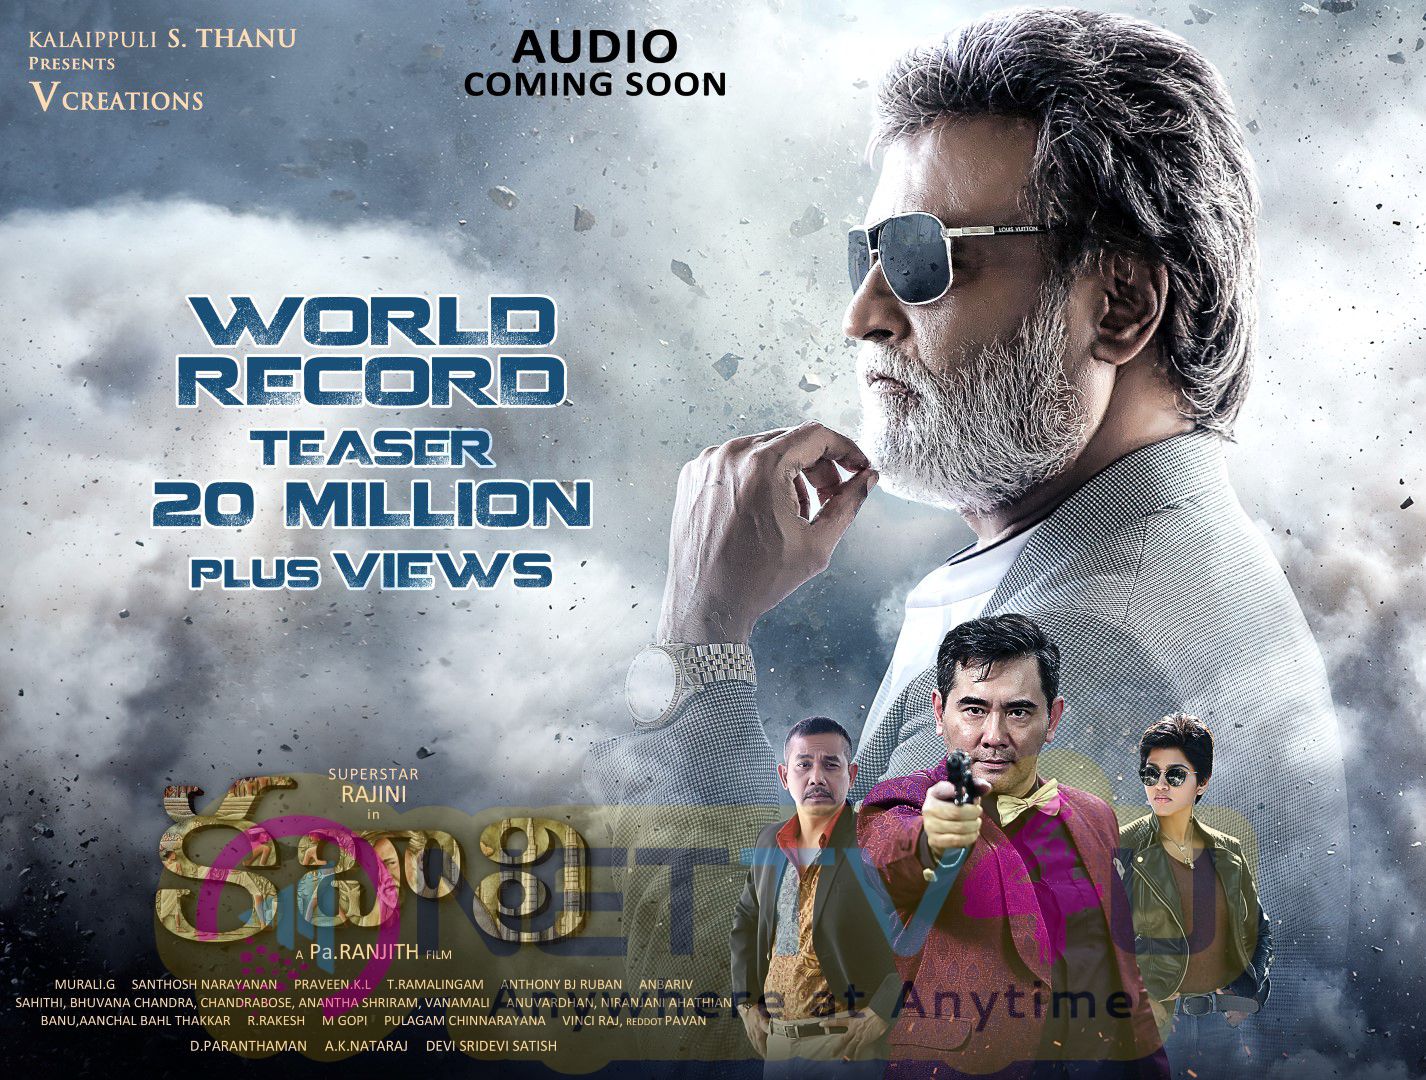  Super Star Rajani Kanth Kabali Movie World Record Teaser 20 Million Plus Views Excellent Posters Telugu Gallery